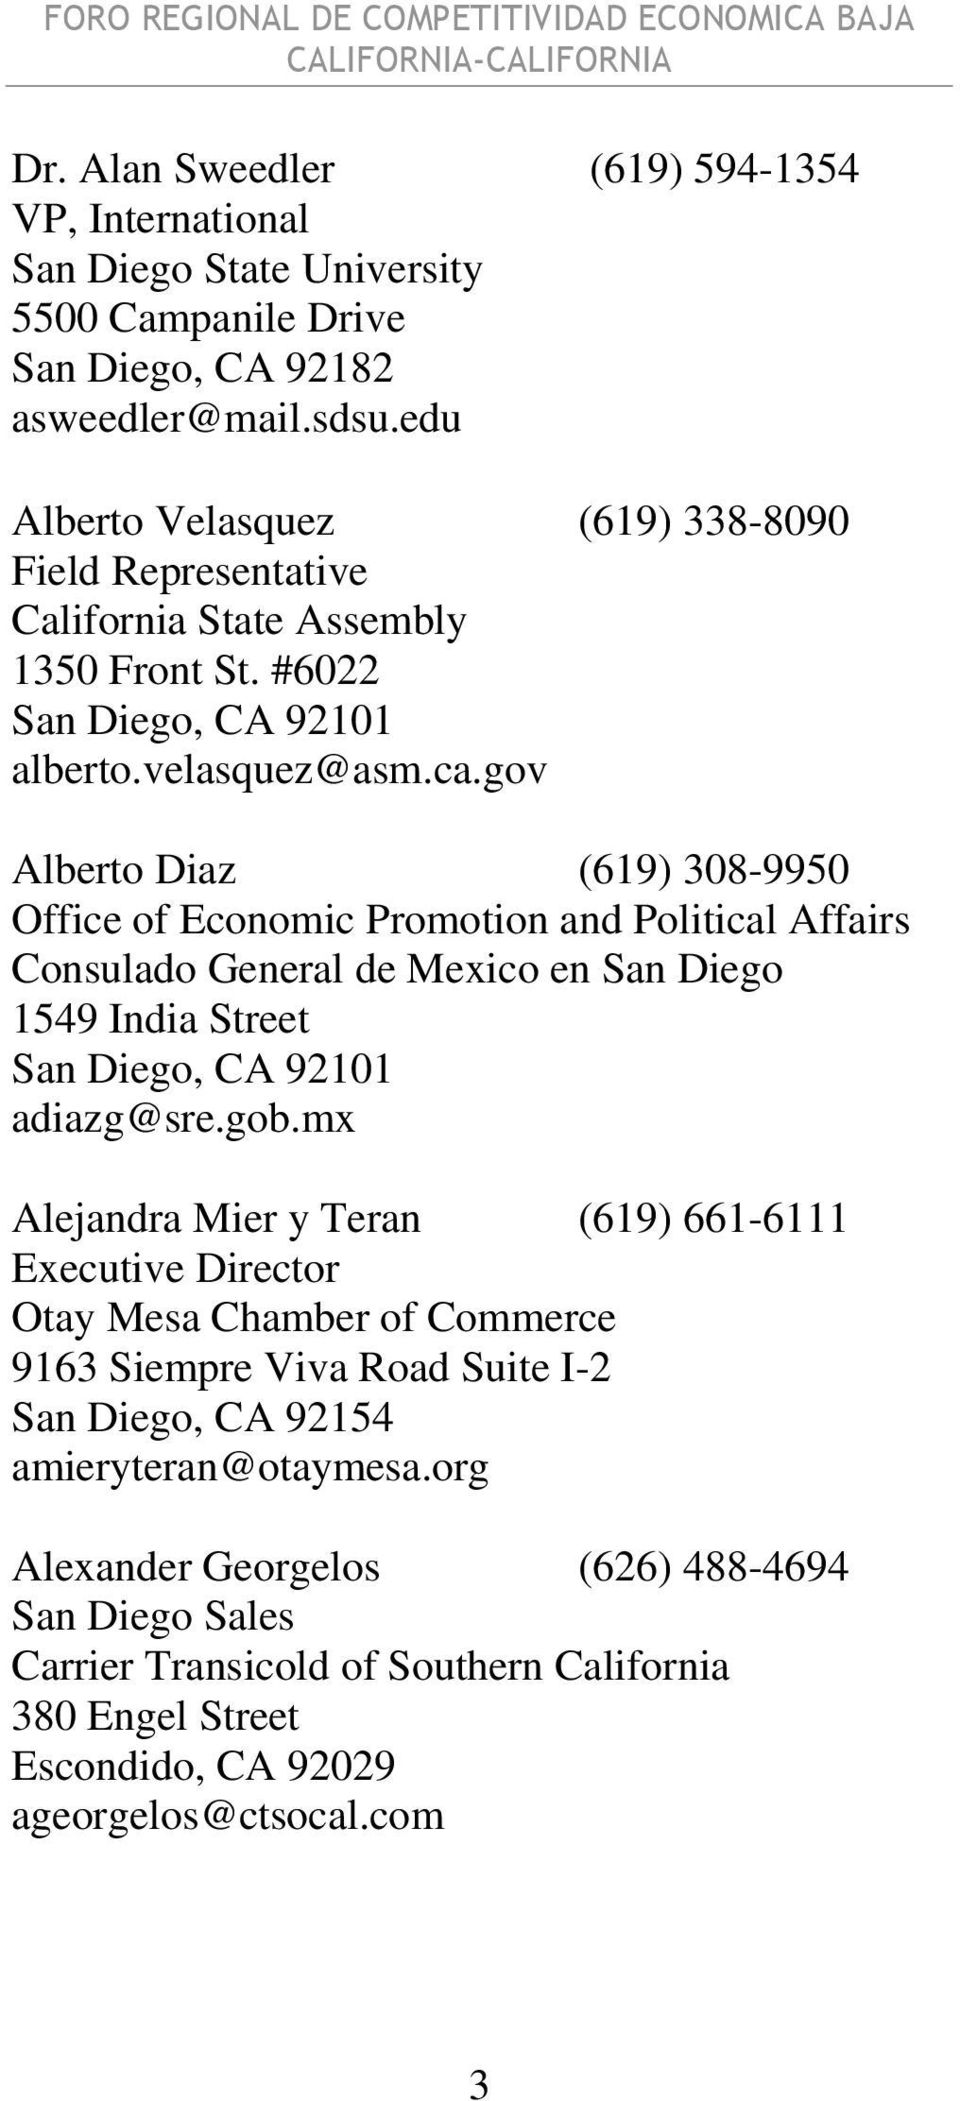 gov Alberto Diaz (619) 308-9950 Office of Economic Promotion and Political Affairs Consulado General de Mexico en San Diego 1549 India Street adiazg@sre.gob.